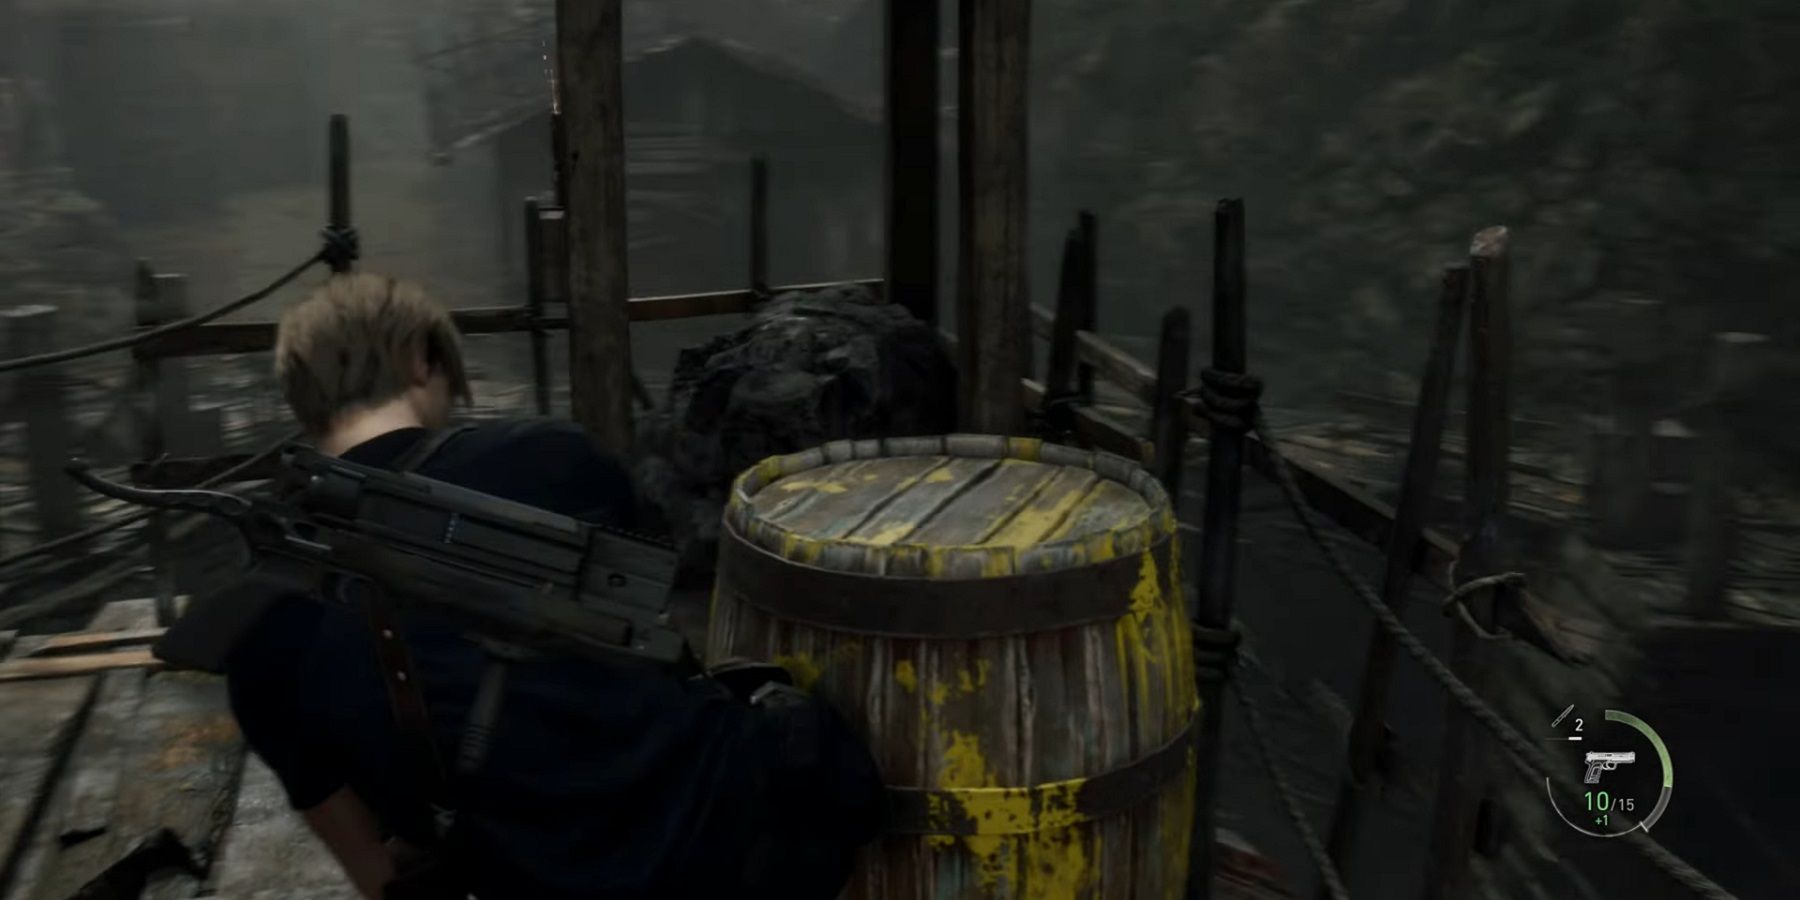 Leon kicking a barrel in Resident Evil 4 Remake.